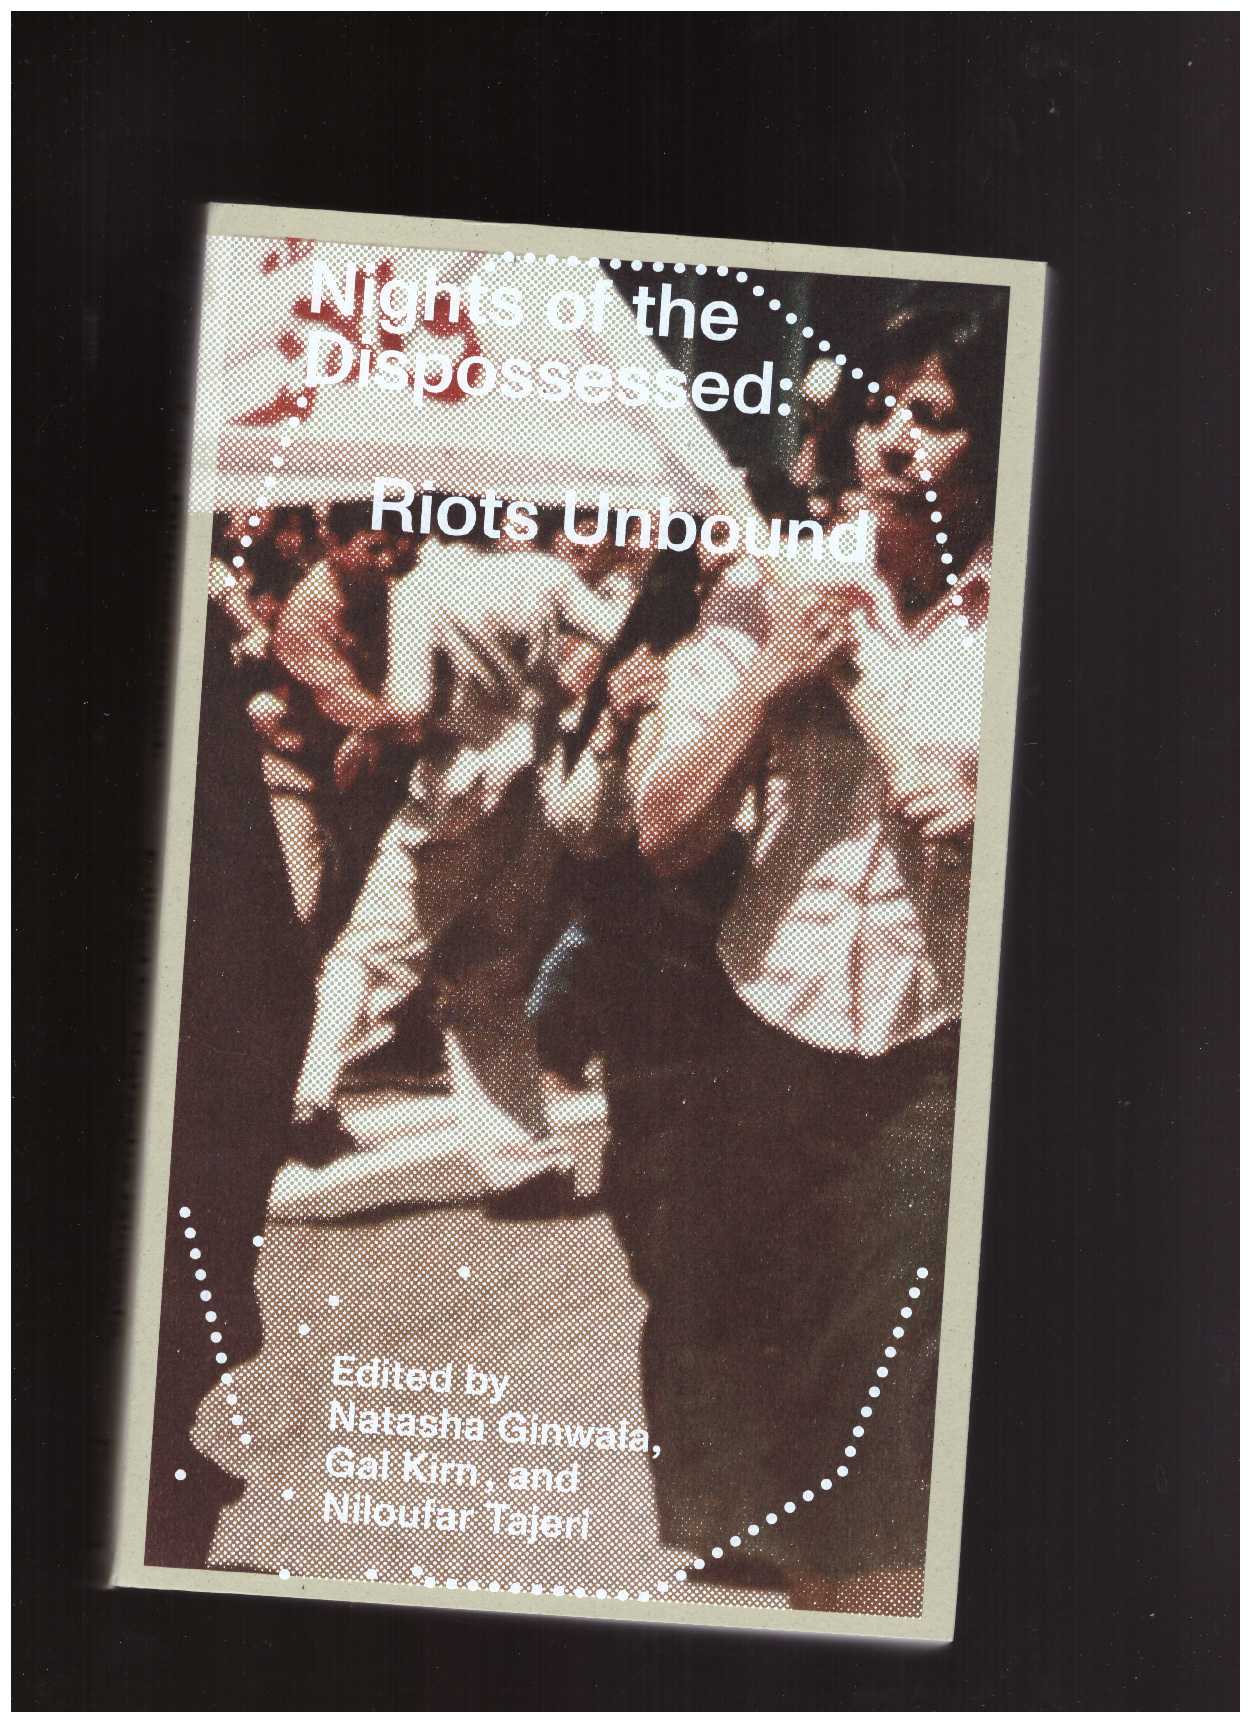 GINWALA, Natasha; KIRN, Gal; TAJERI, Niloufar (eds.) - Nights of the Dispossessed: Riots Unbound